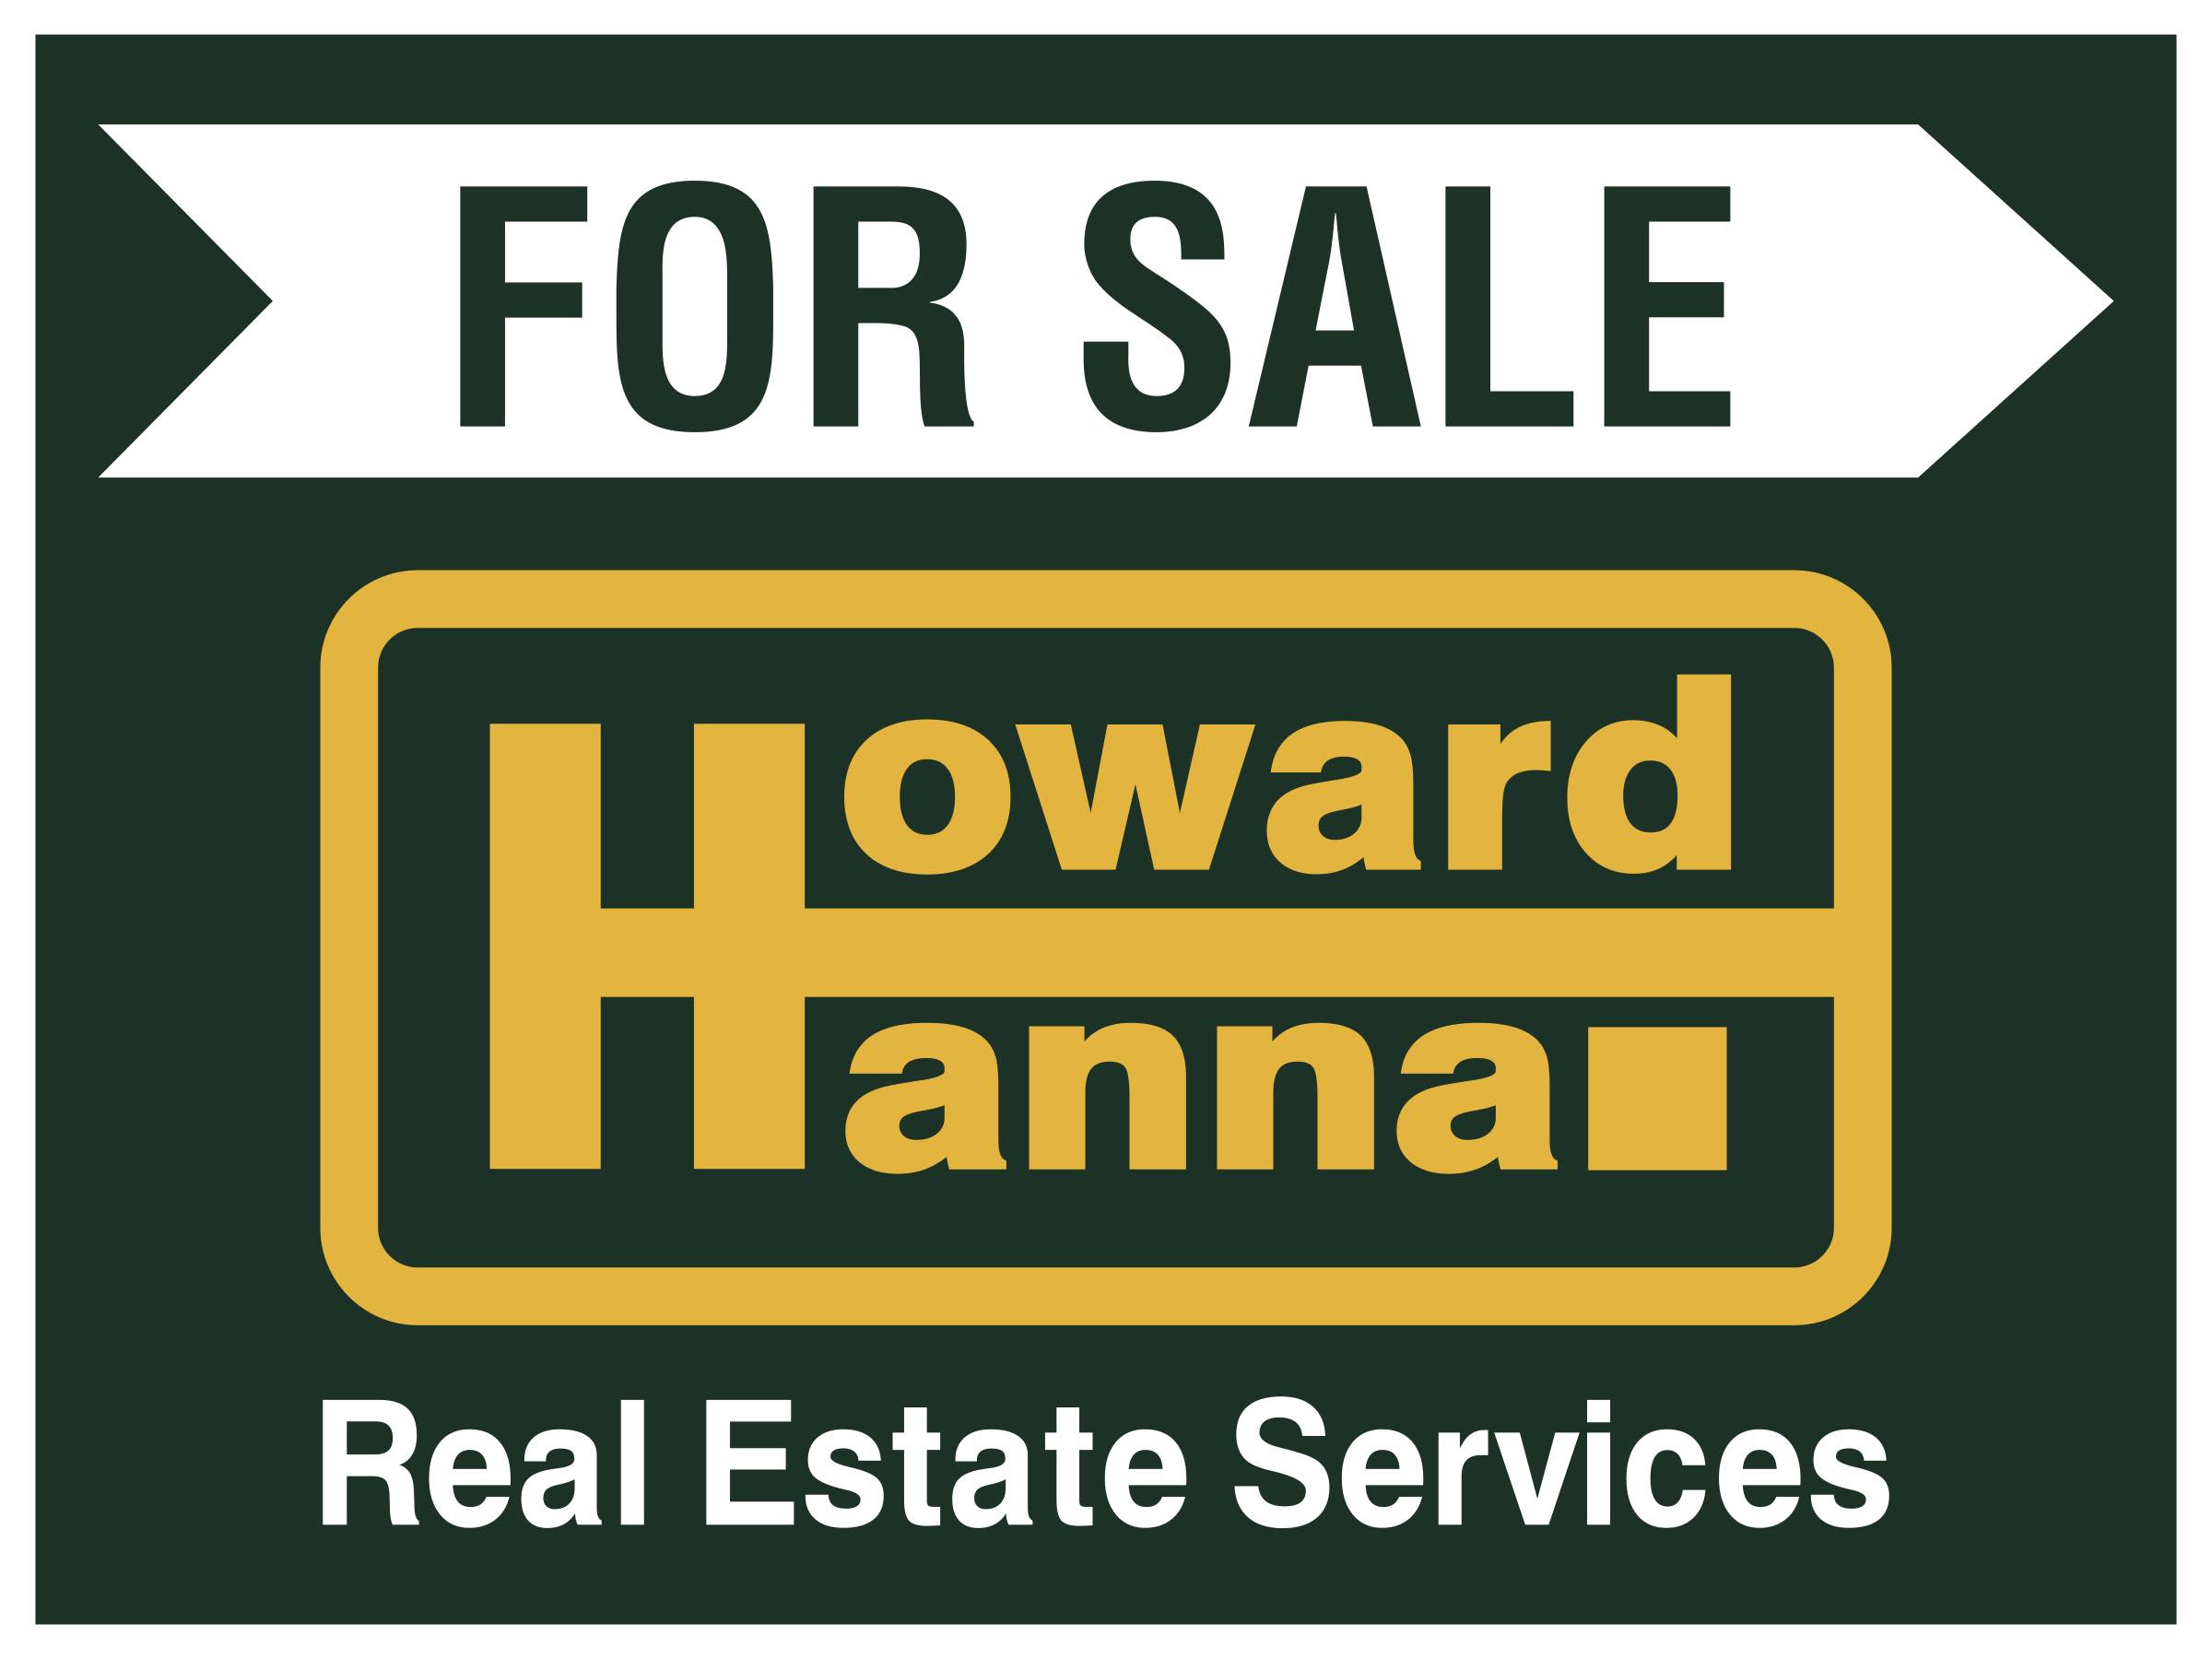 Generic Howard Hanna Real Estate Signage by Bokland Custom Visuals